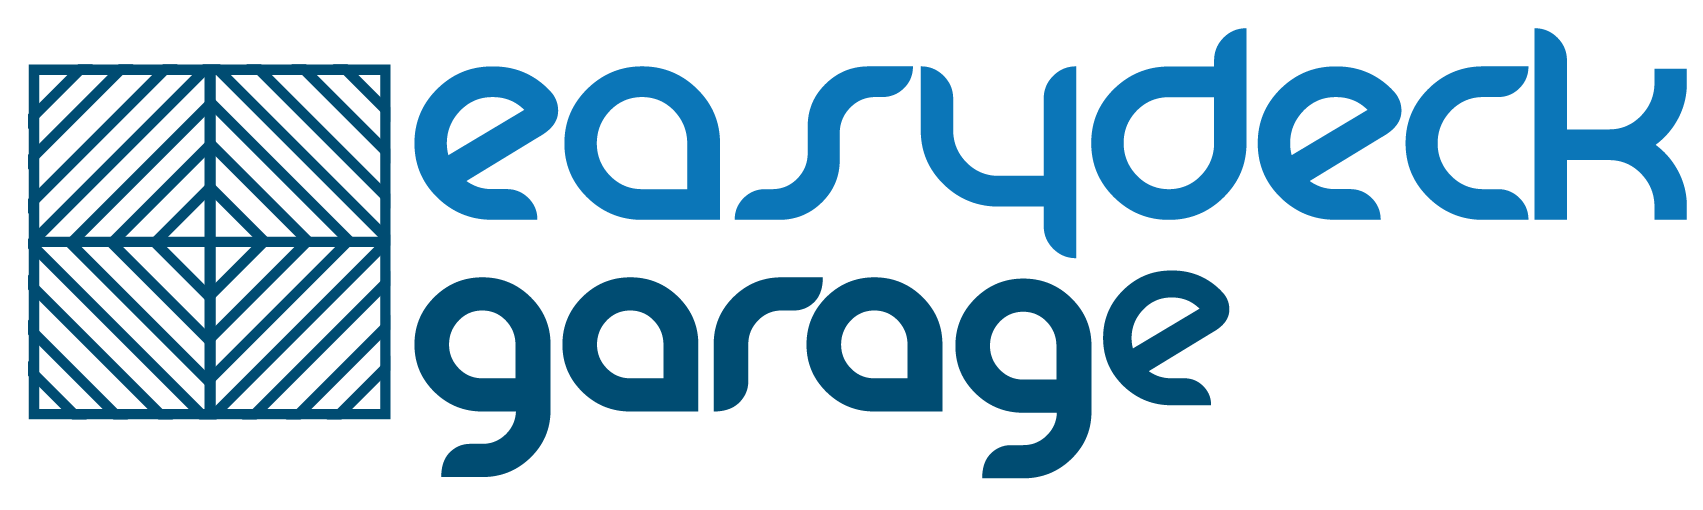 logotipo easydeck garage 